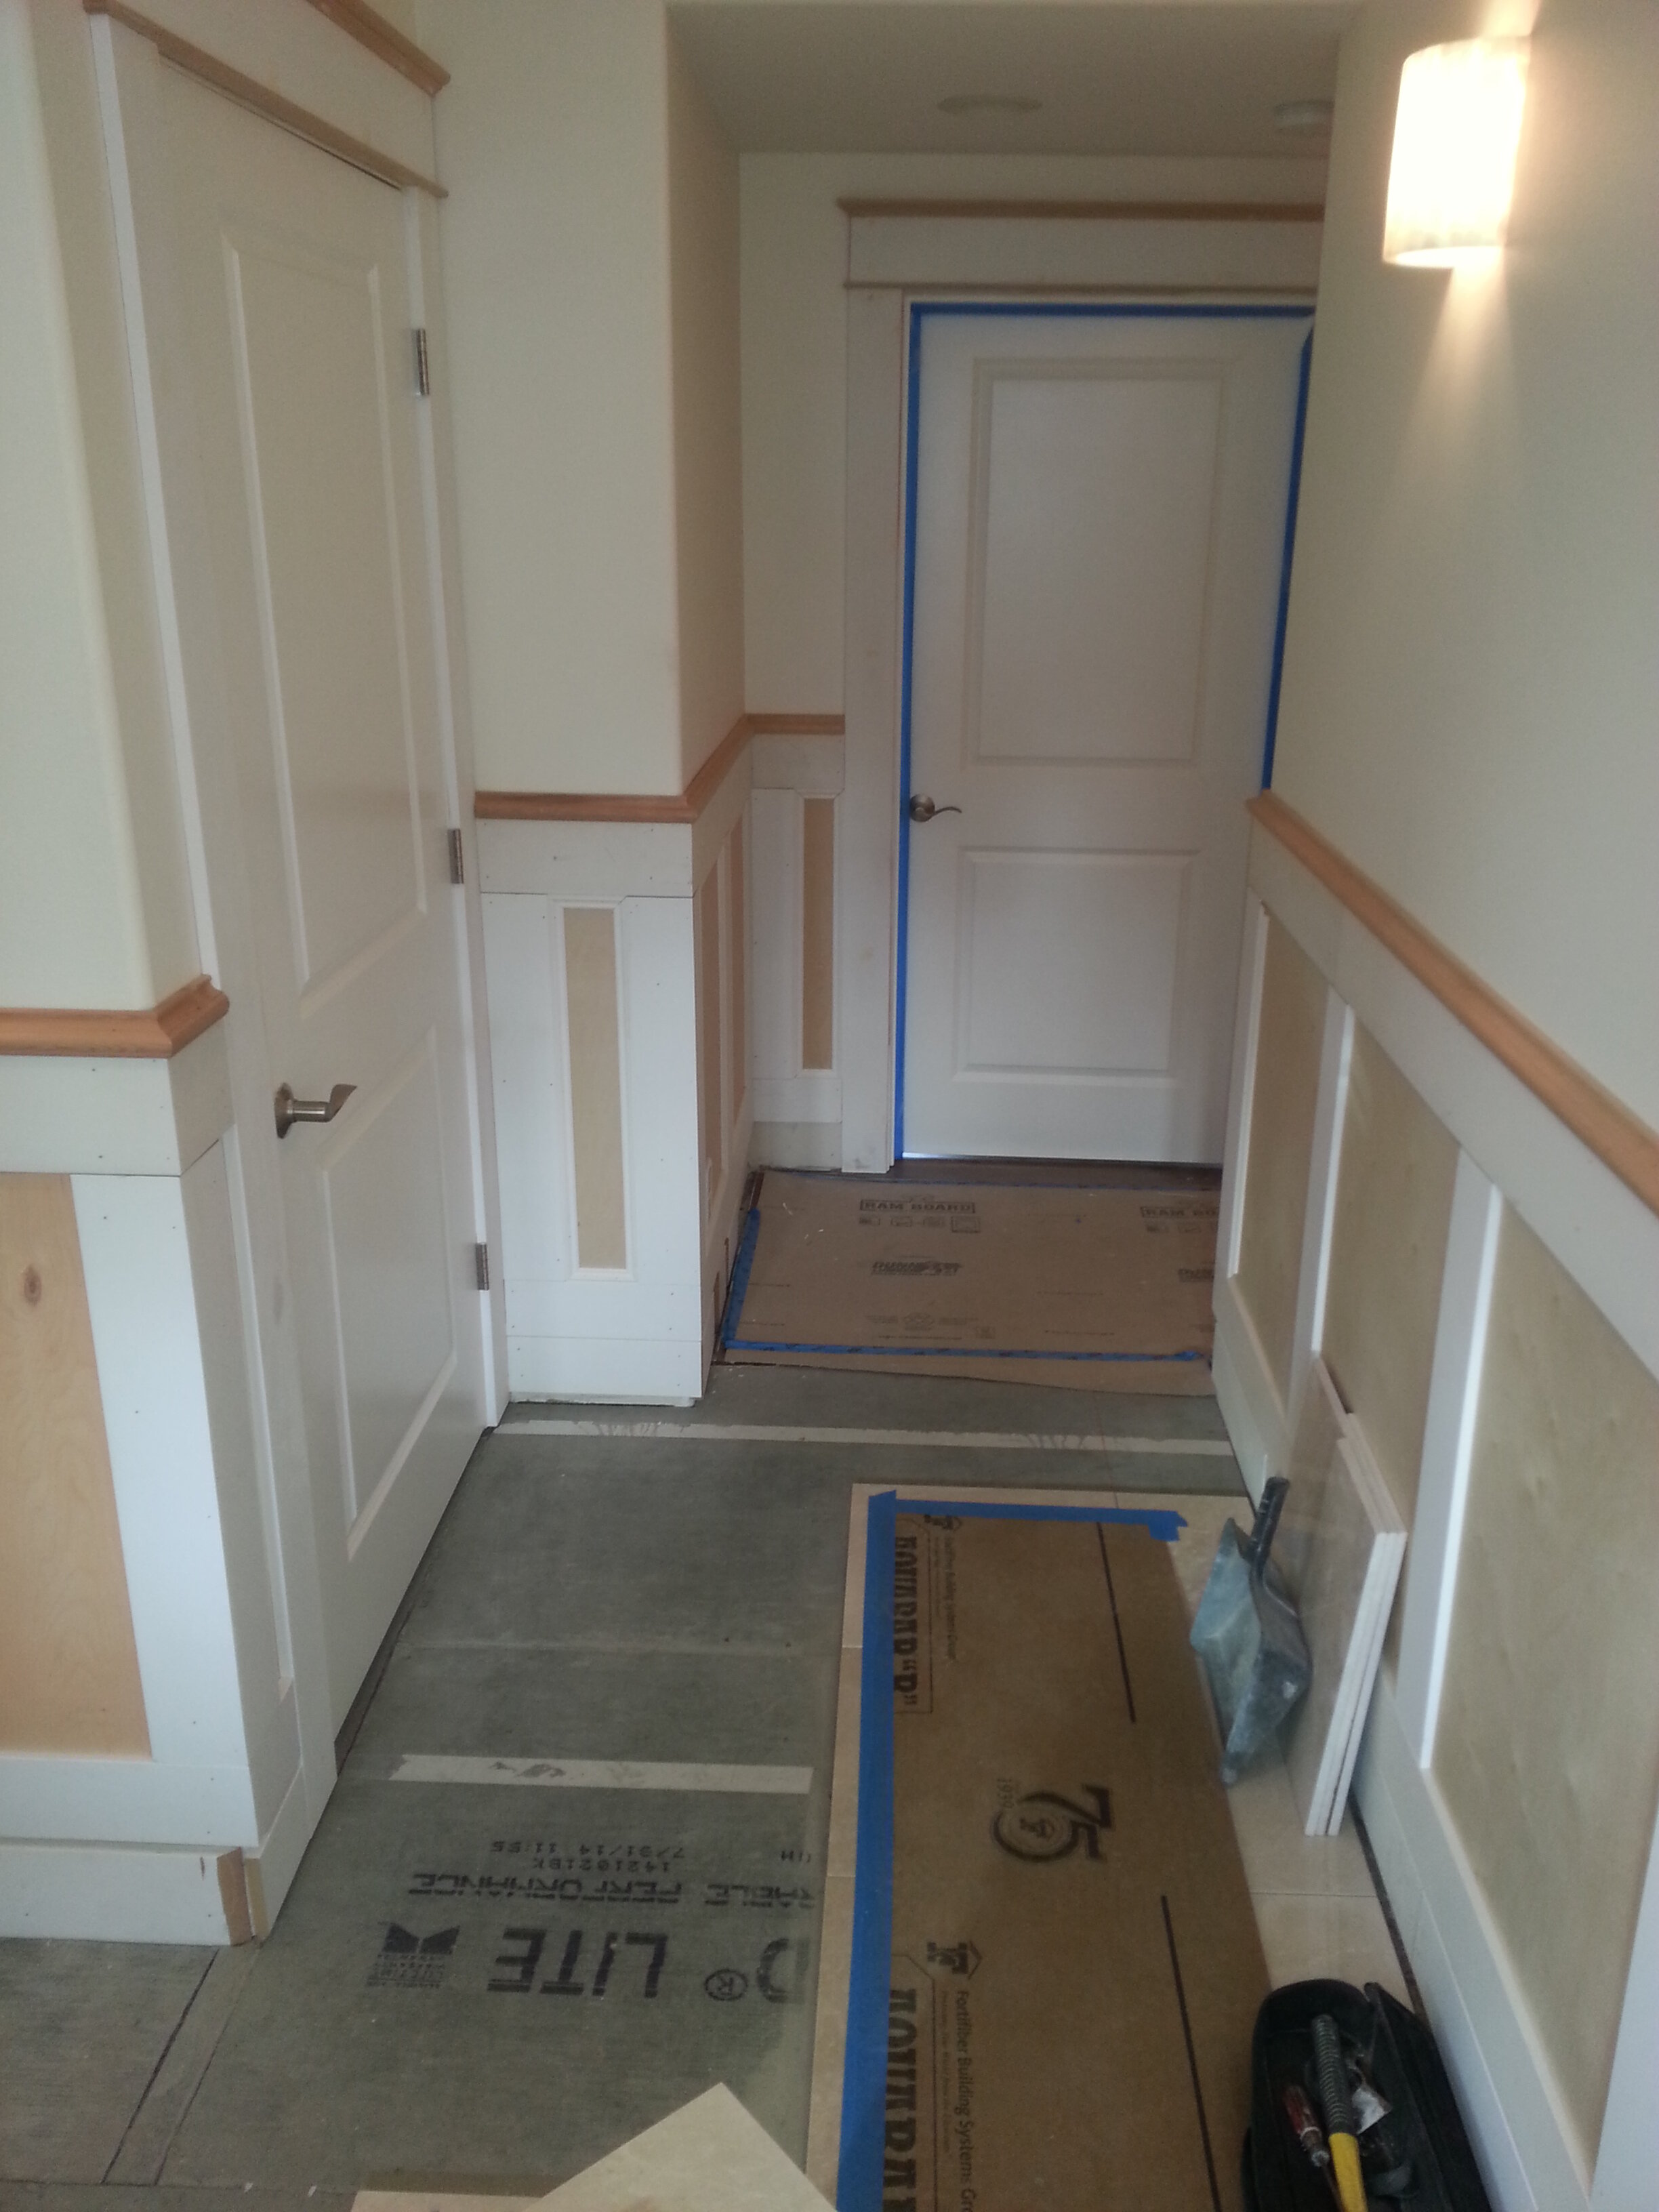 1 - Interior Carpentry Service - Wainscot Paneling Installation.jpg